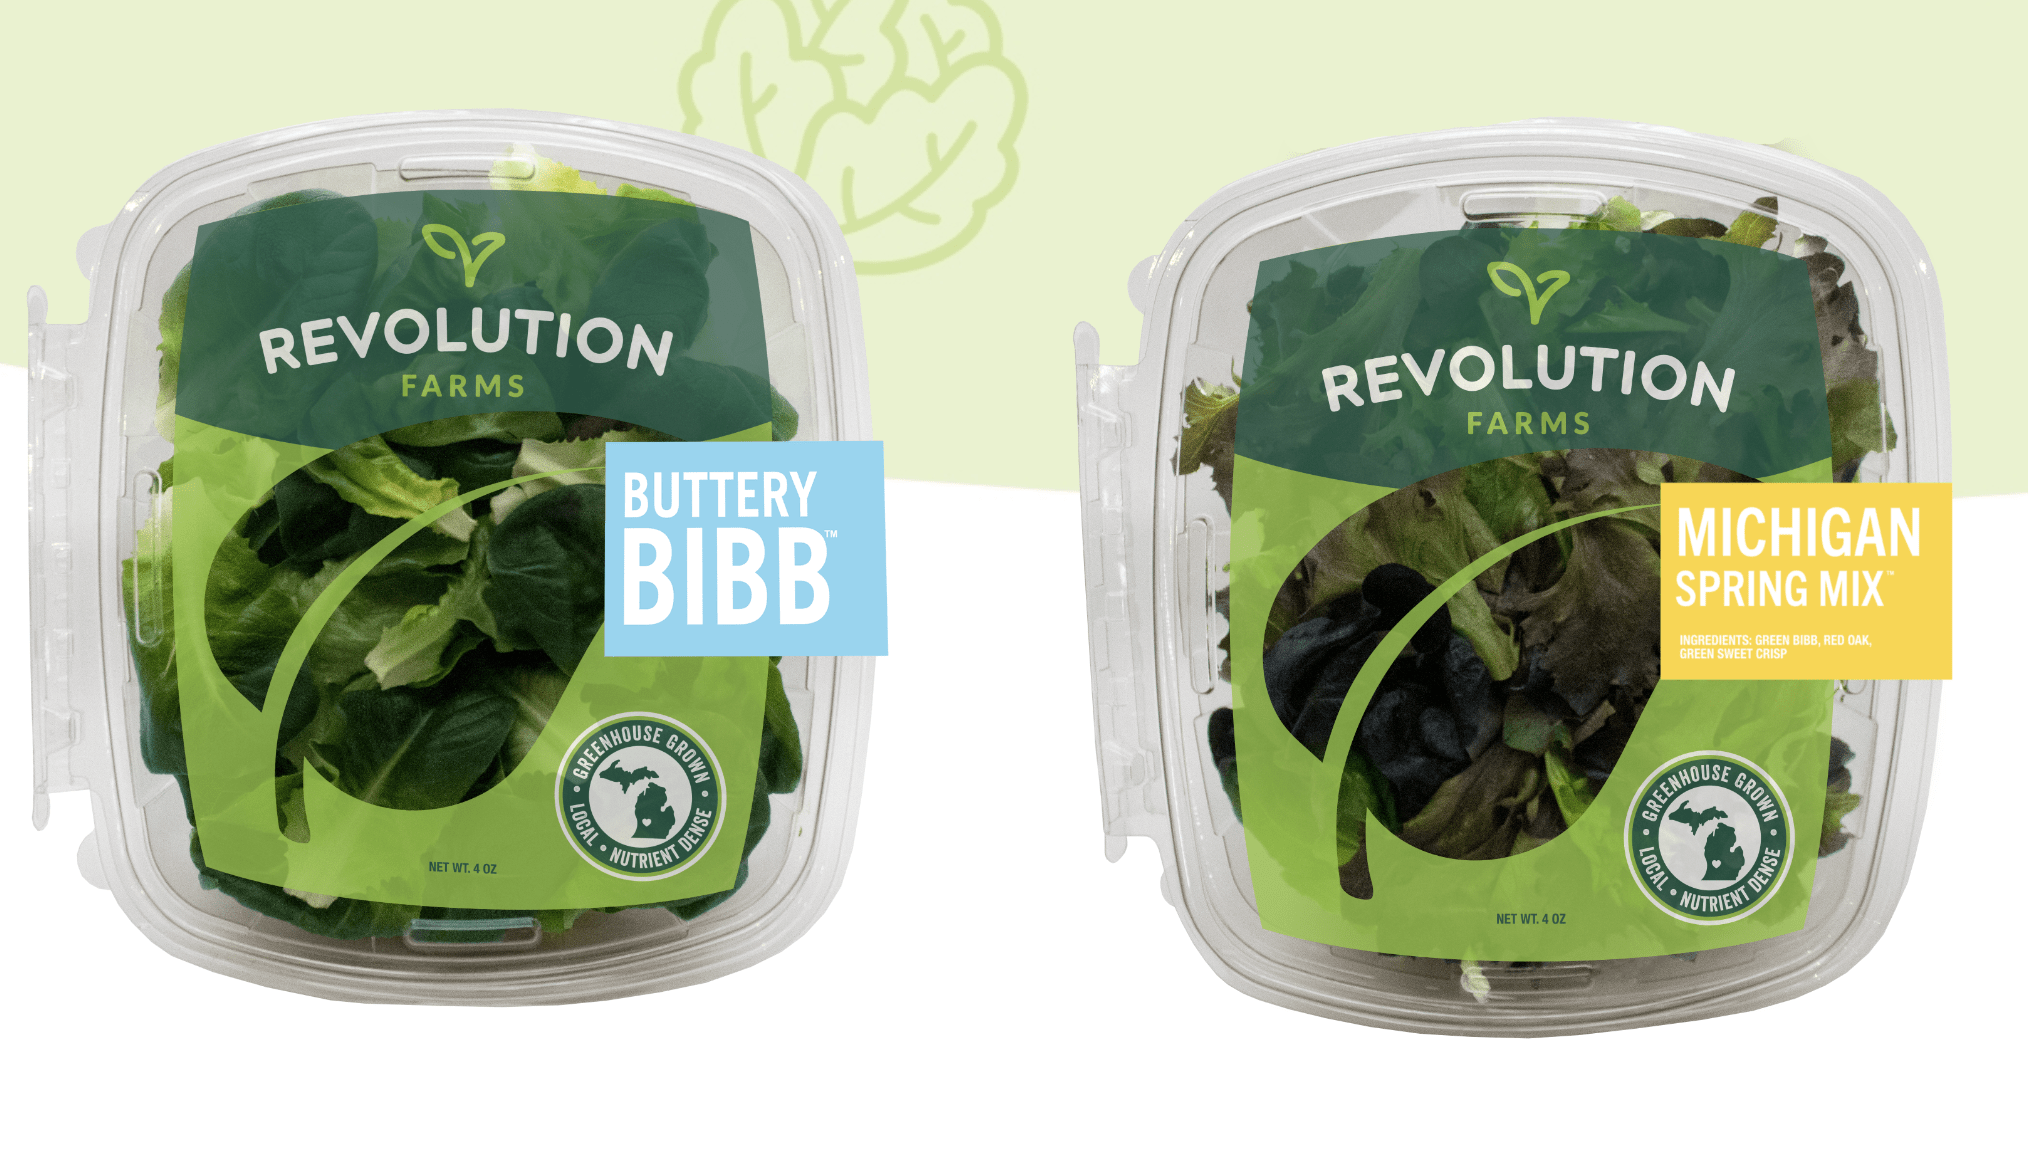 Revolution Farms packaged salad